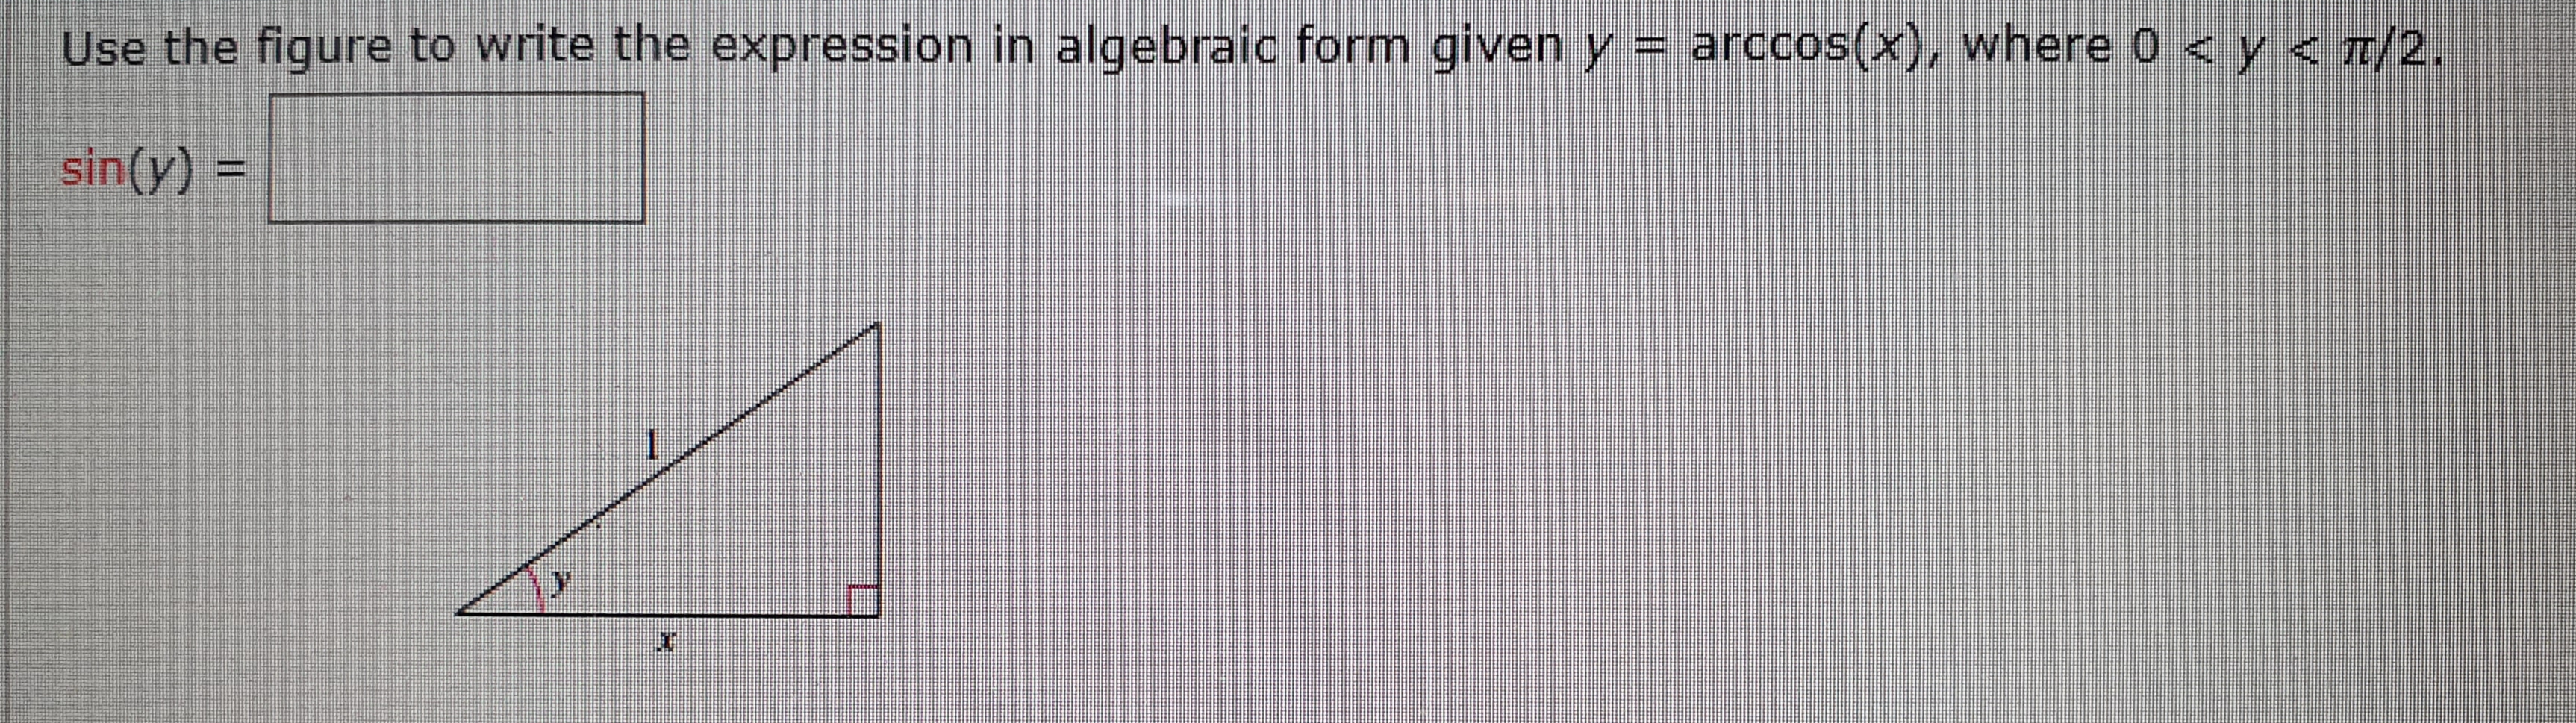 Use the figure to write the expression in algebraic form given y = arccos(x), where o < y <T/2.
sin(y)
